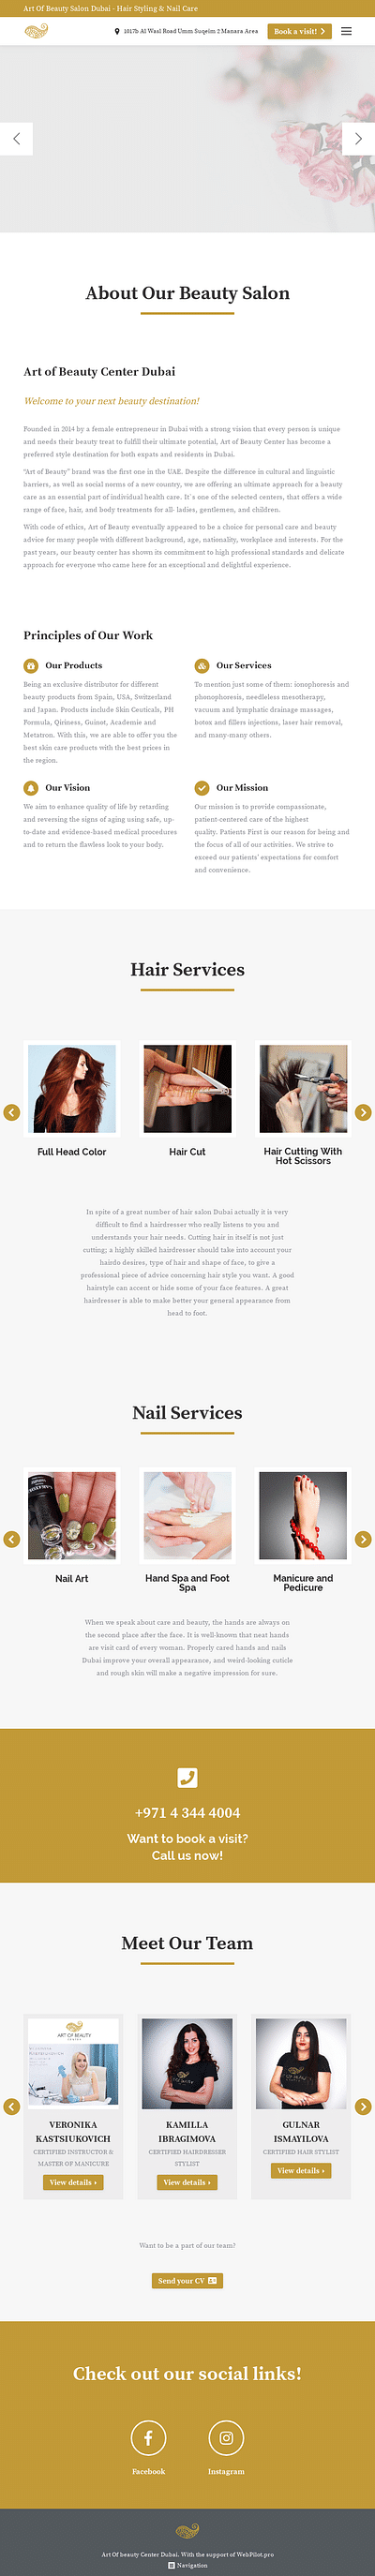 nails and hair artofbeautycenter - Website Creation